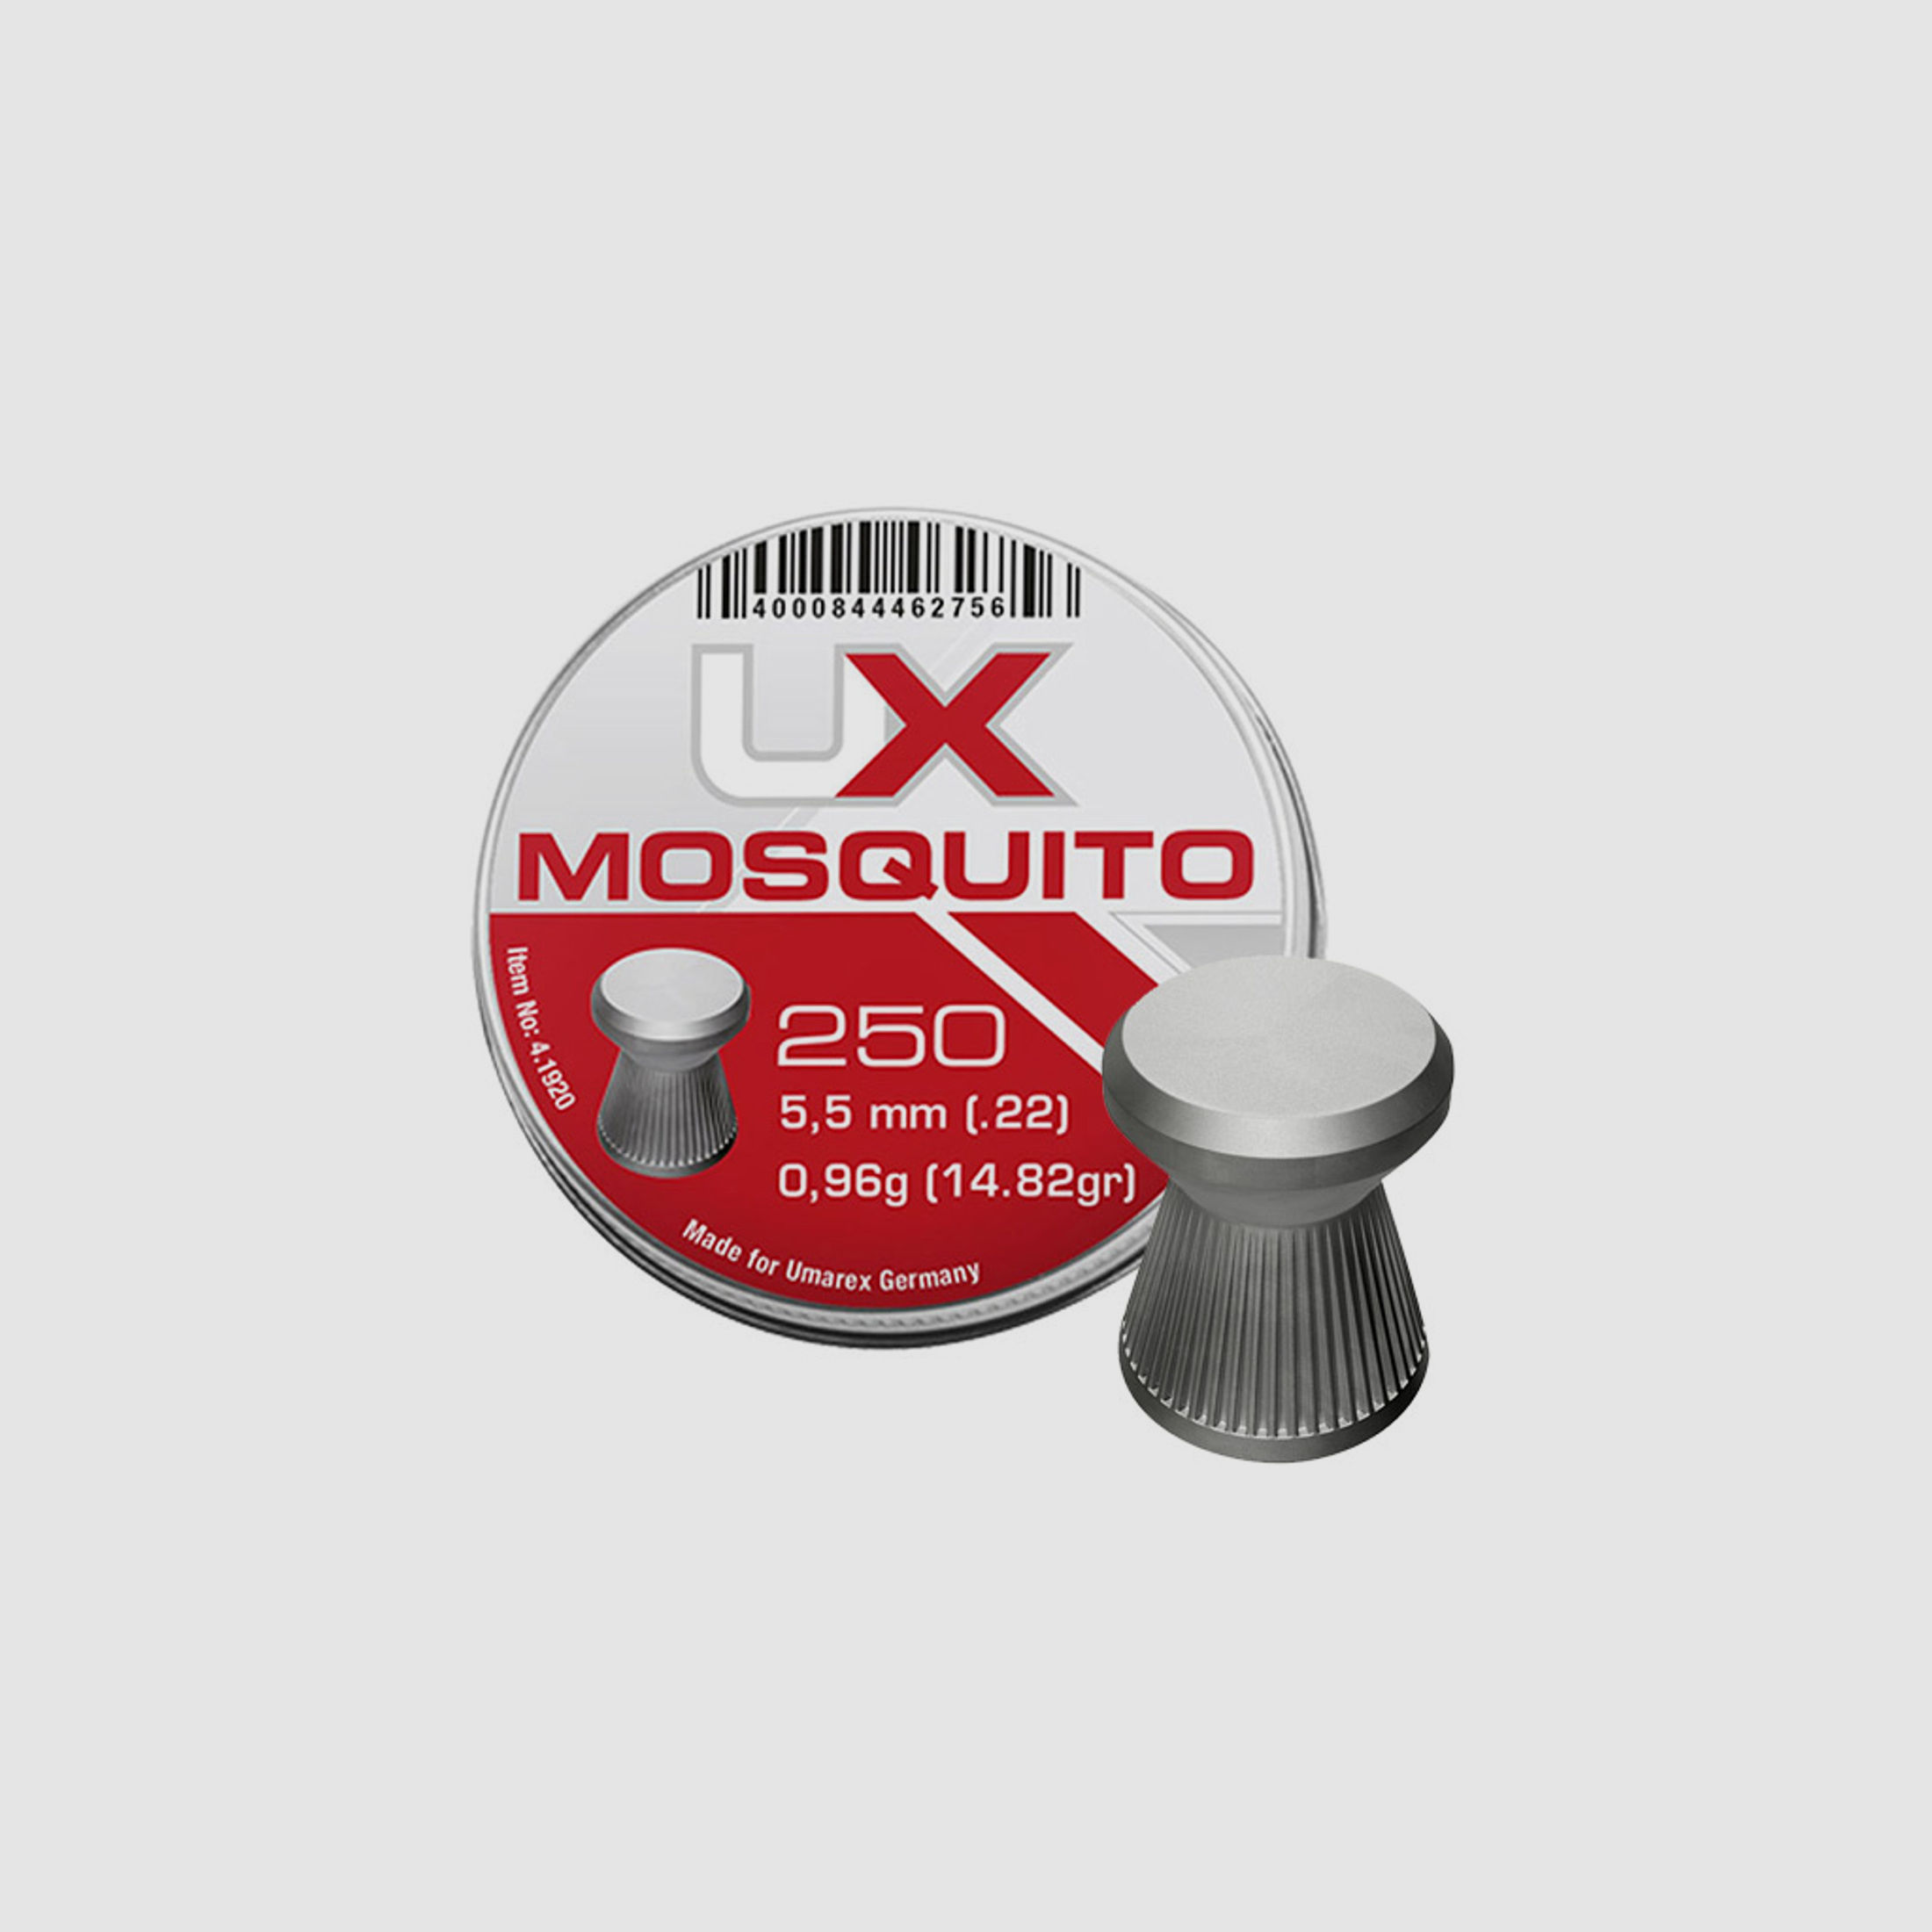 Flachkopf Diabolos Umarex Mosquito Kaliber 5,5 mm 0,96 g geriffelt 250 StĂĽck